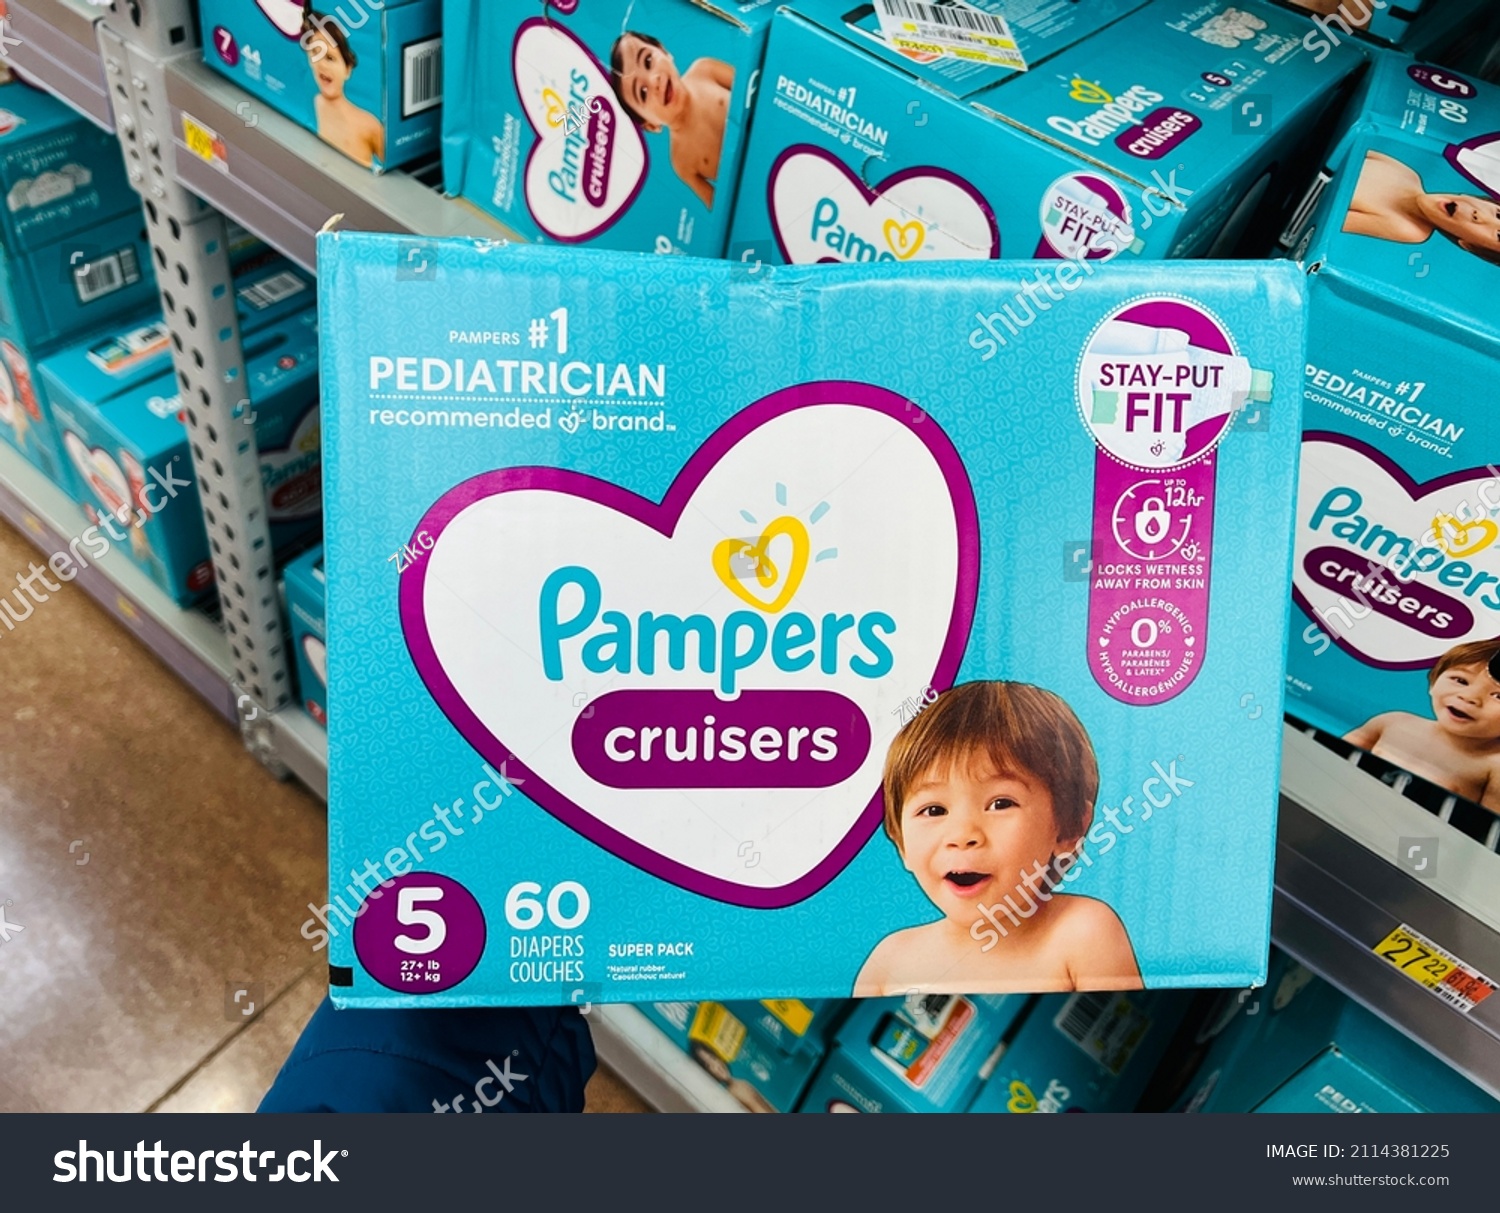 2,471 Diapers box Images, Stock Photos & Vectors | Shutterstock